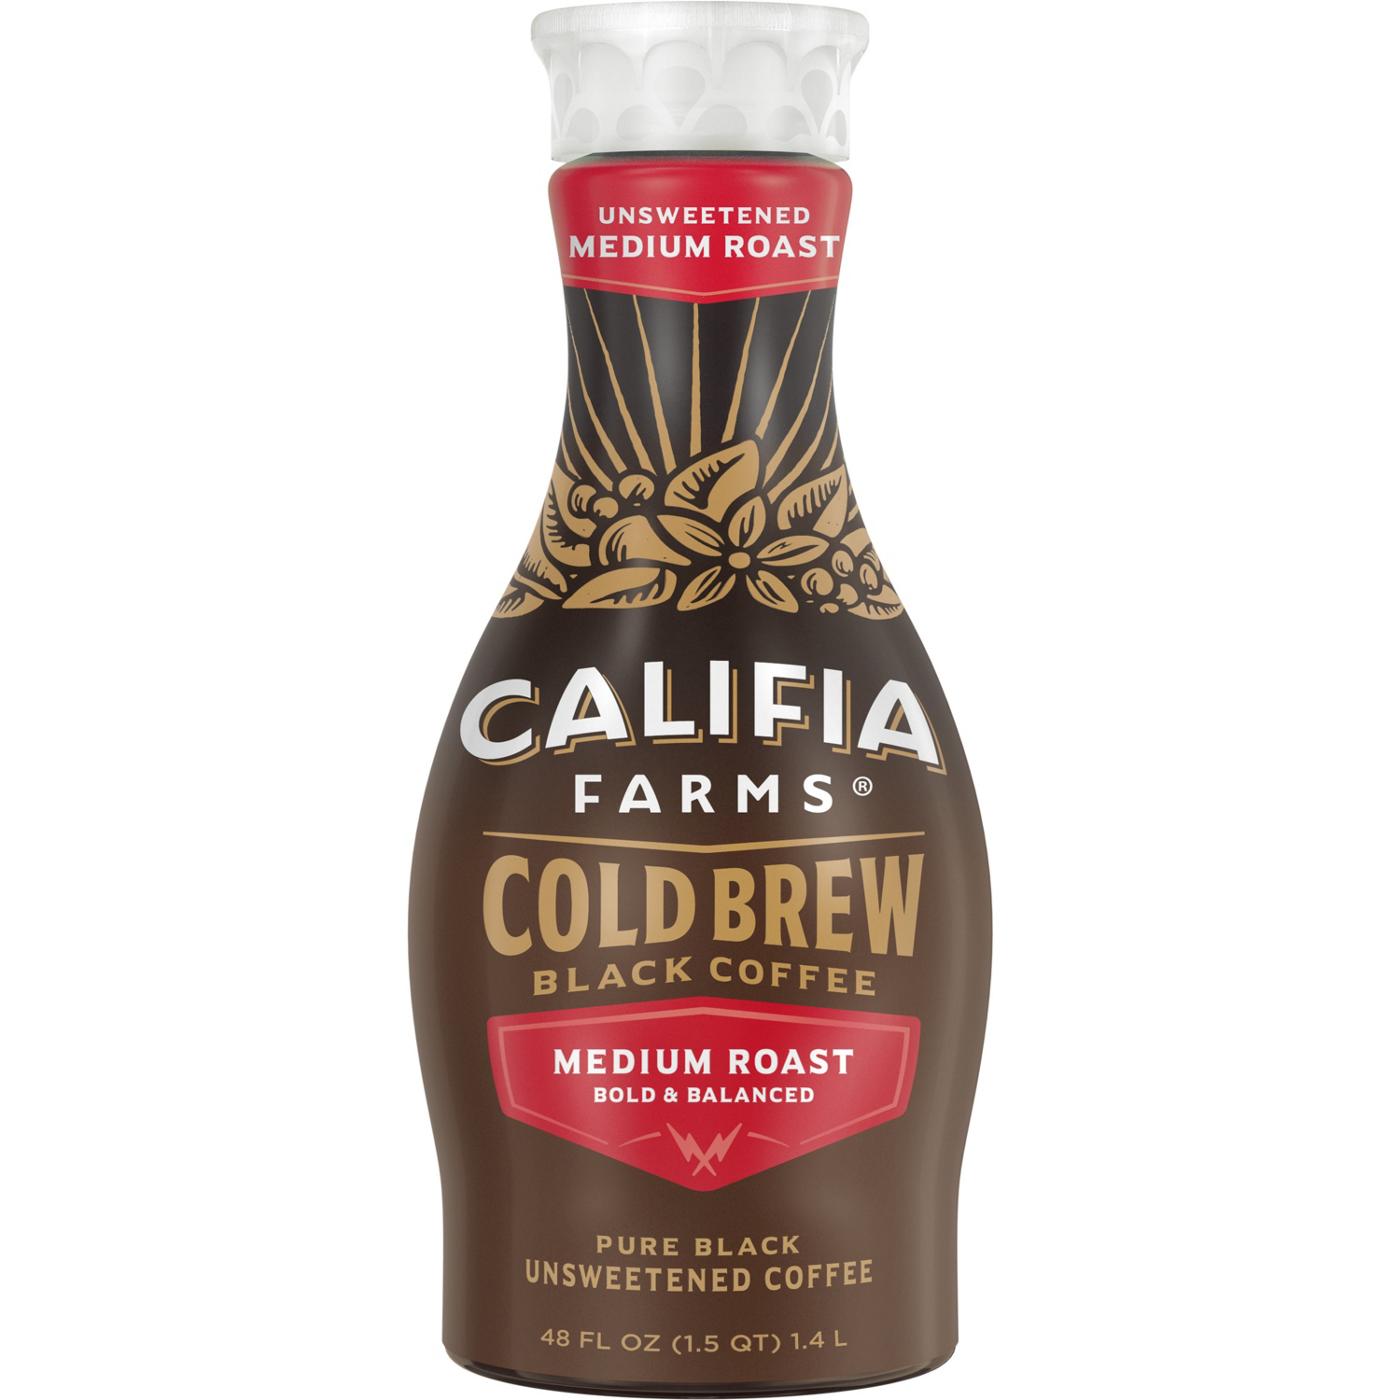 Califia Farms Unsweetened Medium Roast Pure Black Cold Brew Coffee; image 1 of 2